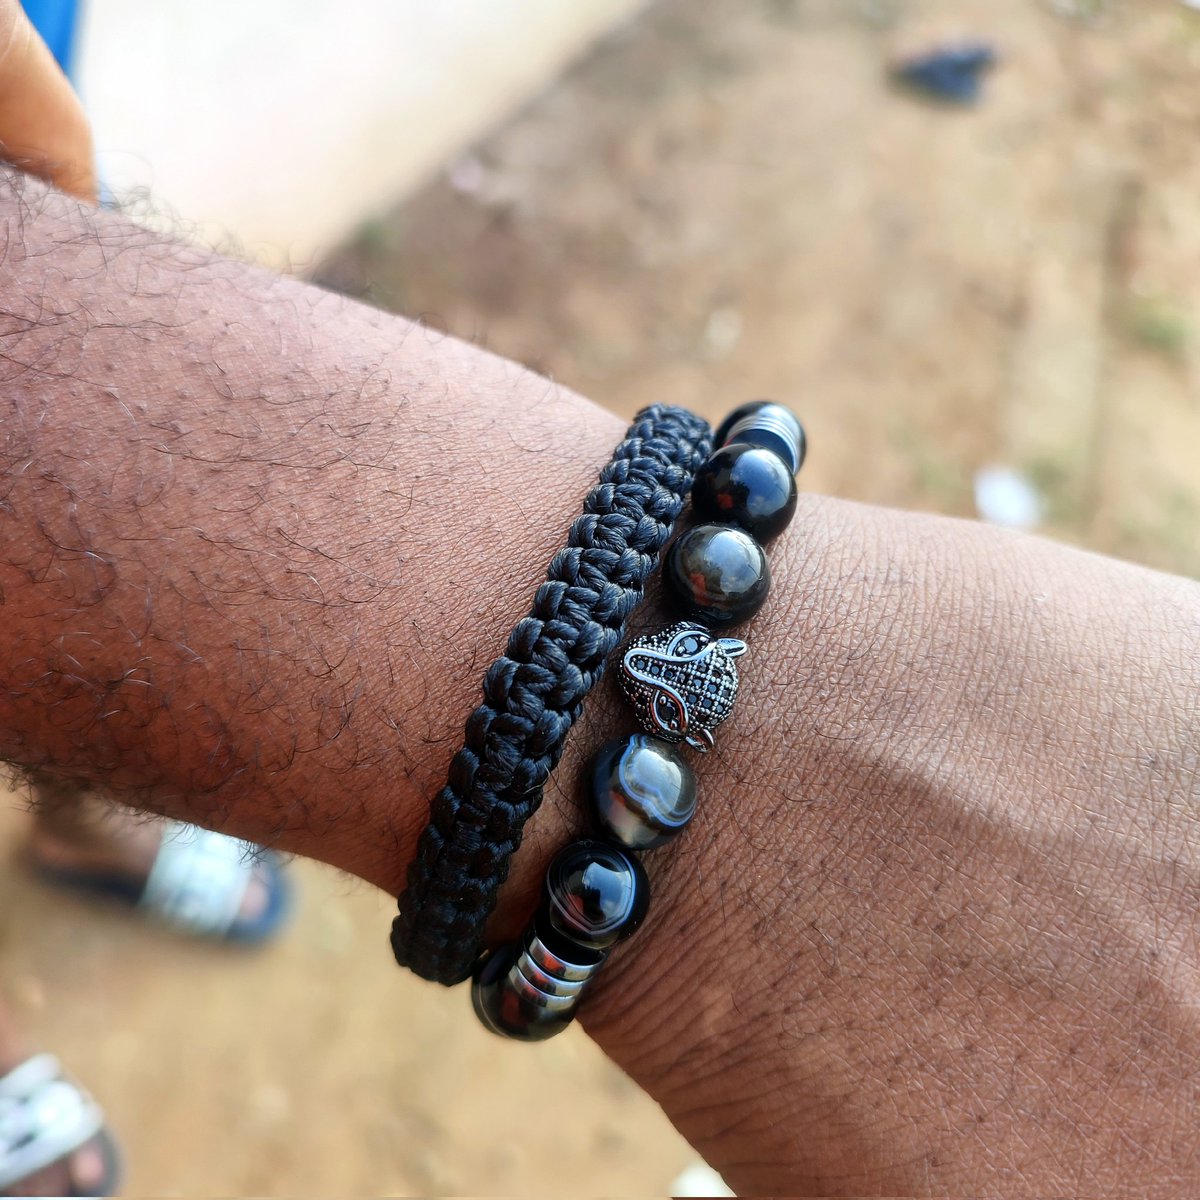 The Mono Mac in black + a personalized bracelet = A perfect set.

◾
◾
◾

#Marchian #handmadebracelet #custombracelet #stonebracelet